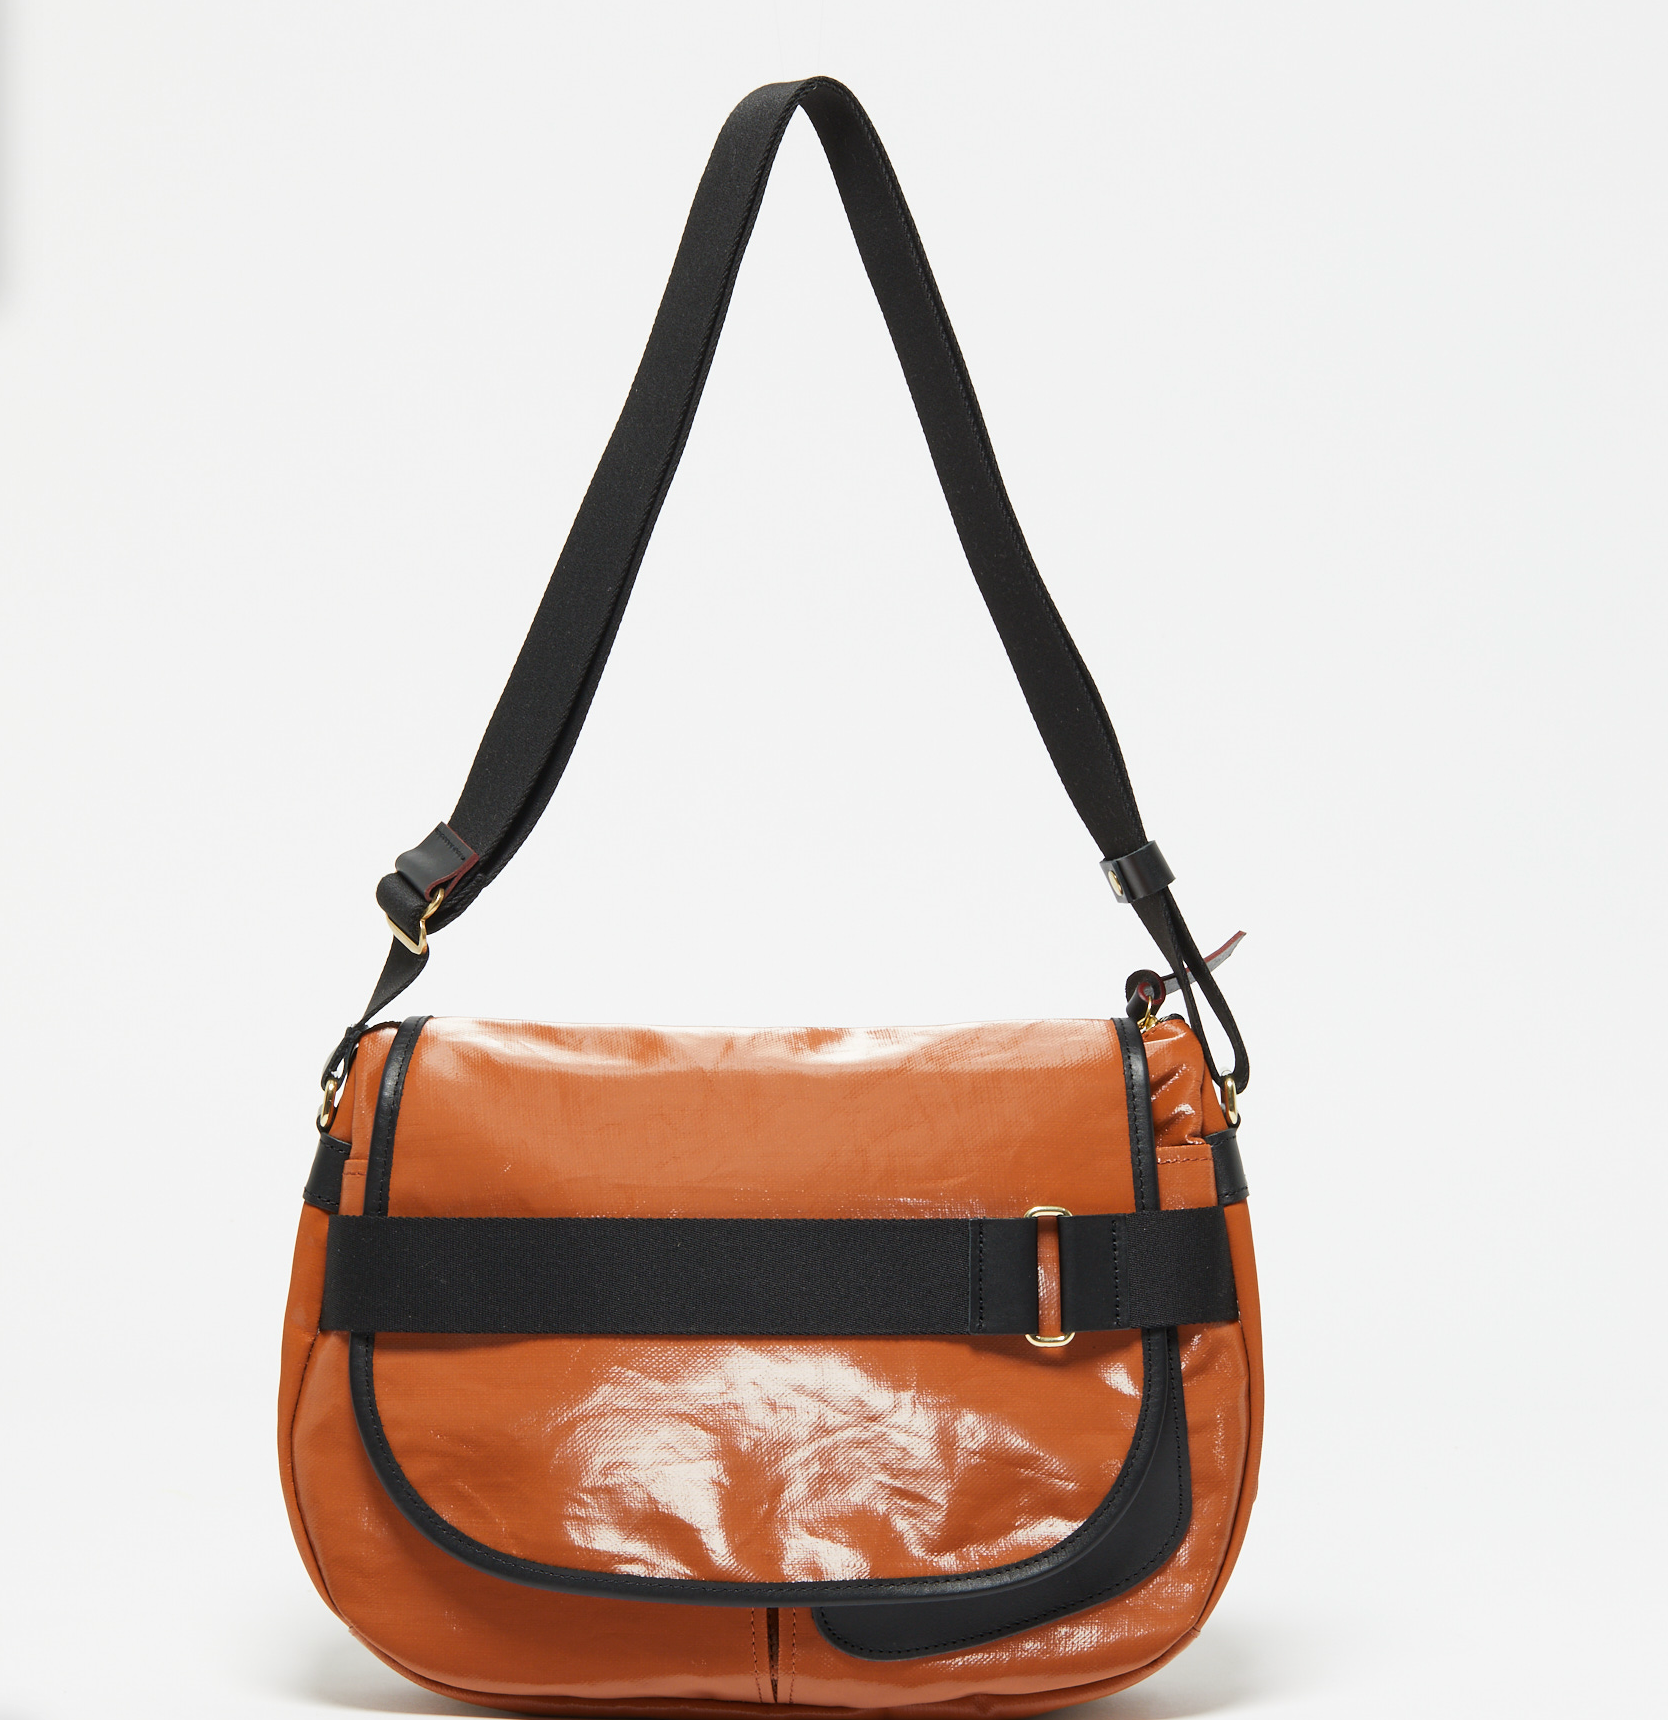 Jack Gomme GABY messenger bag in Coated Linen Pecan  - Big Bag NY